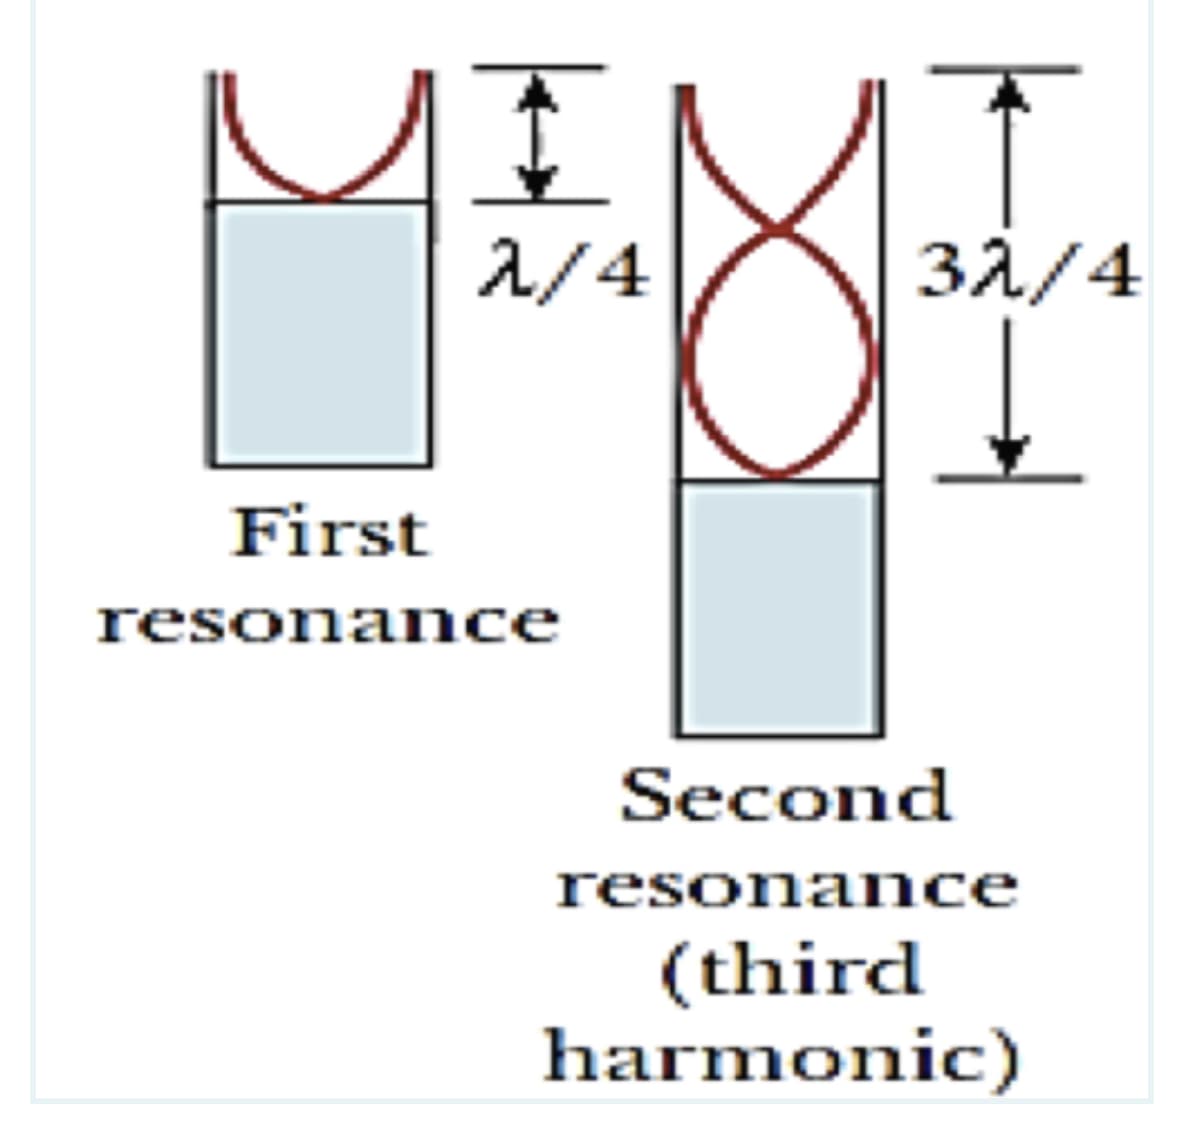 MIMI
2/4
32/4
First
resonance
Second
resonance
(third
harmonic)
